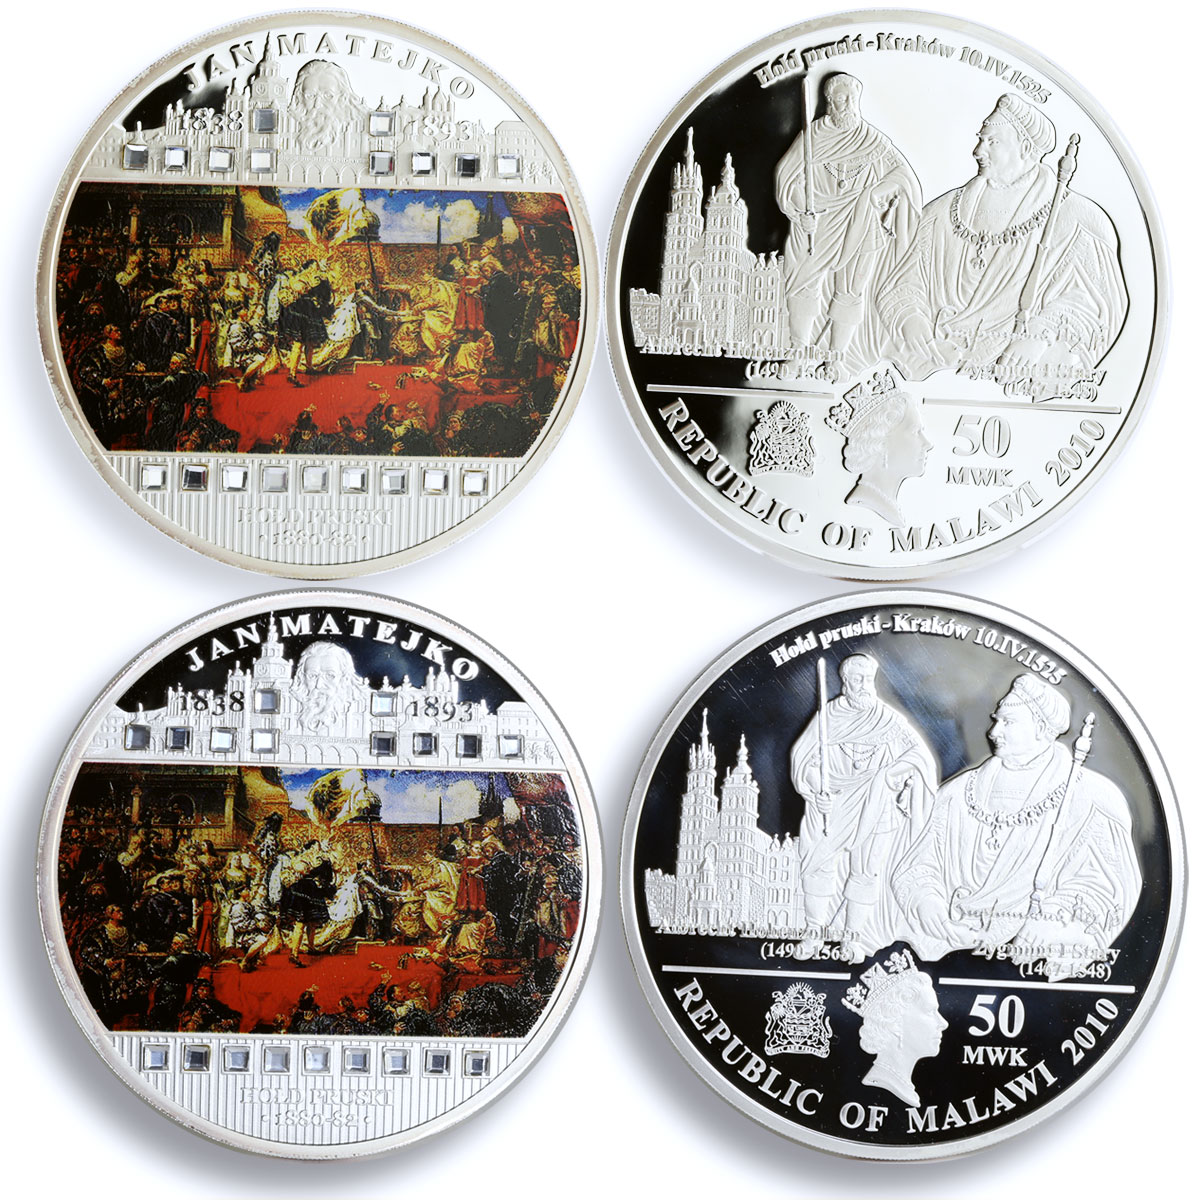 Malawi set of 6 coins Polish Painter Jan Matejko Art colored silver coins 2009